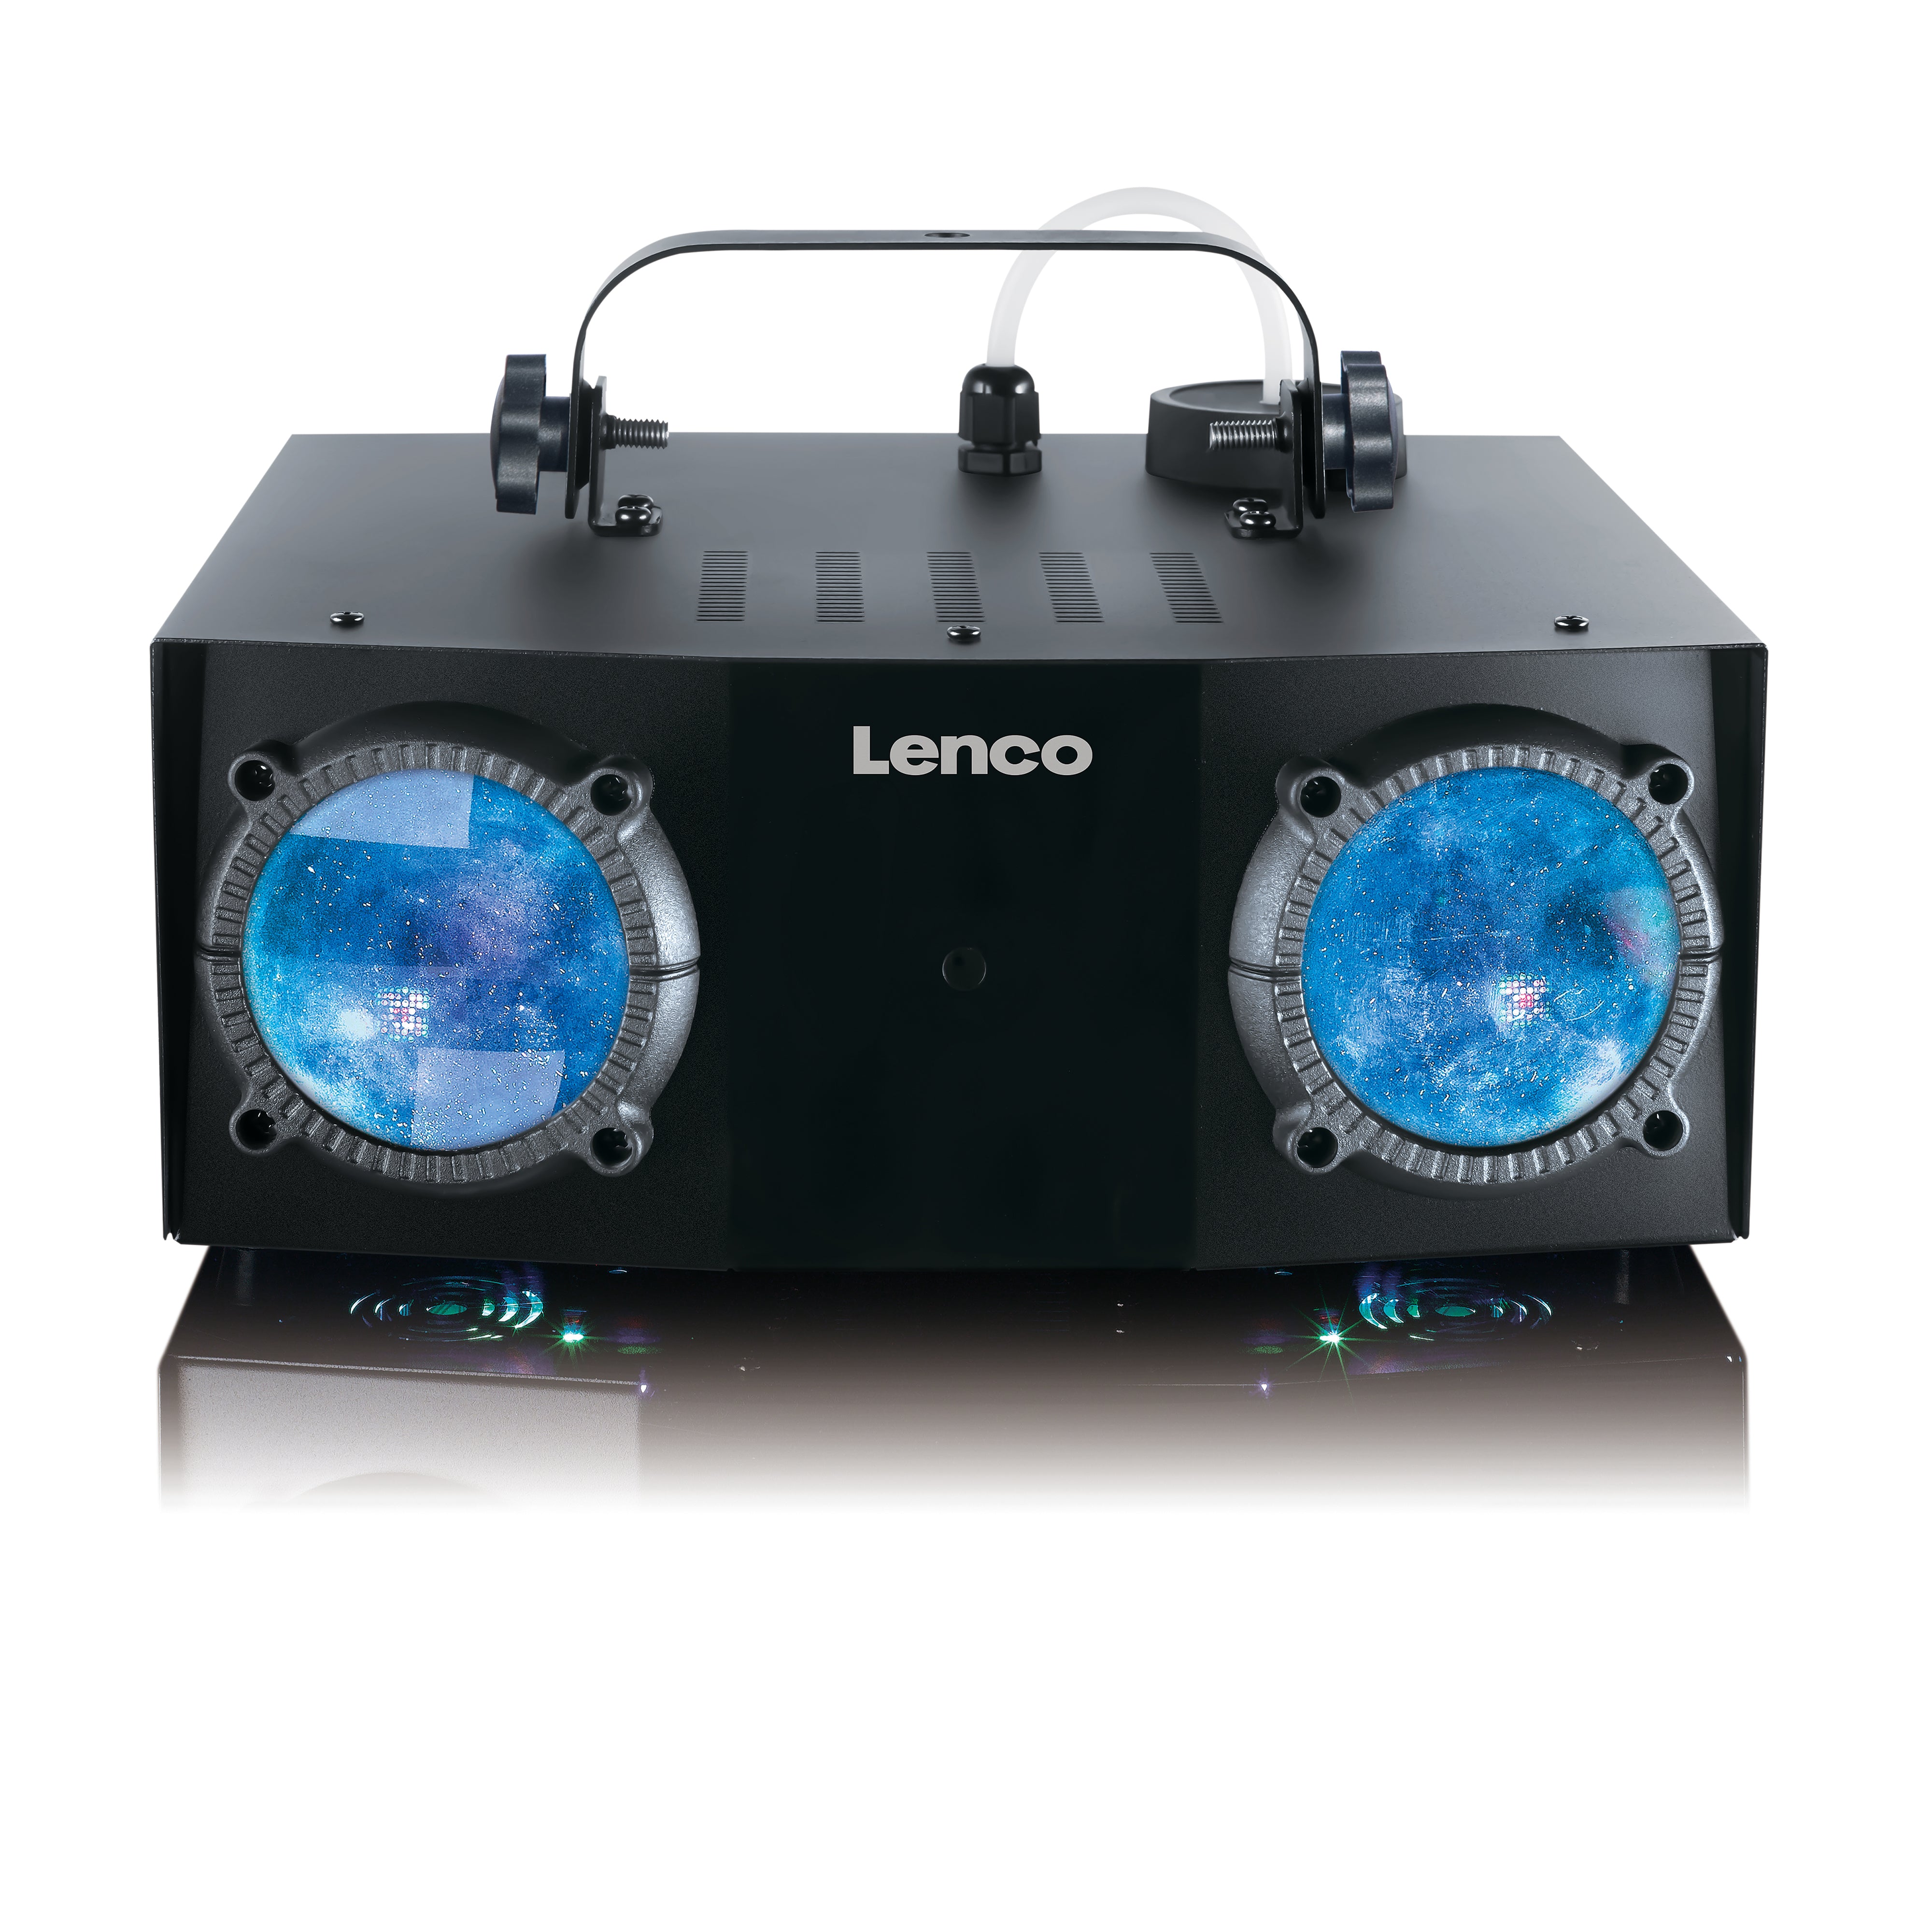 LENCO LFM-110BK - and machine party Lenco LED – Matrix -Catalog light fog Dual